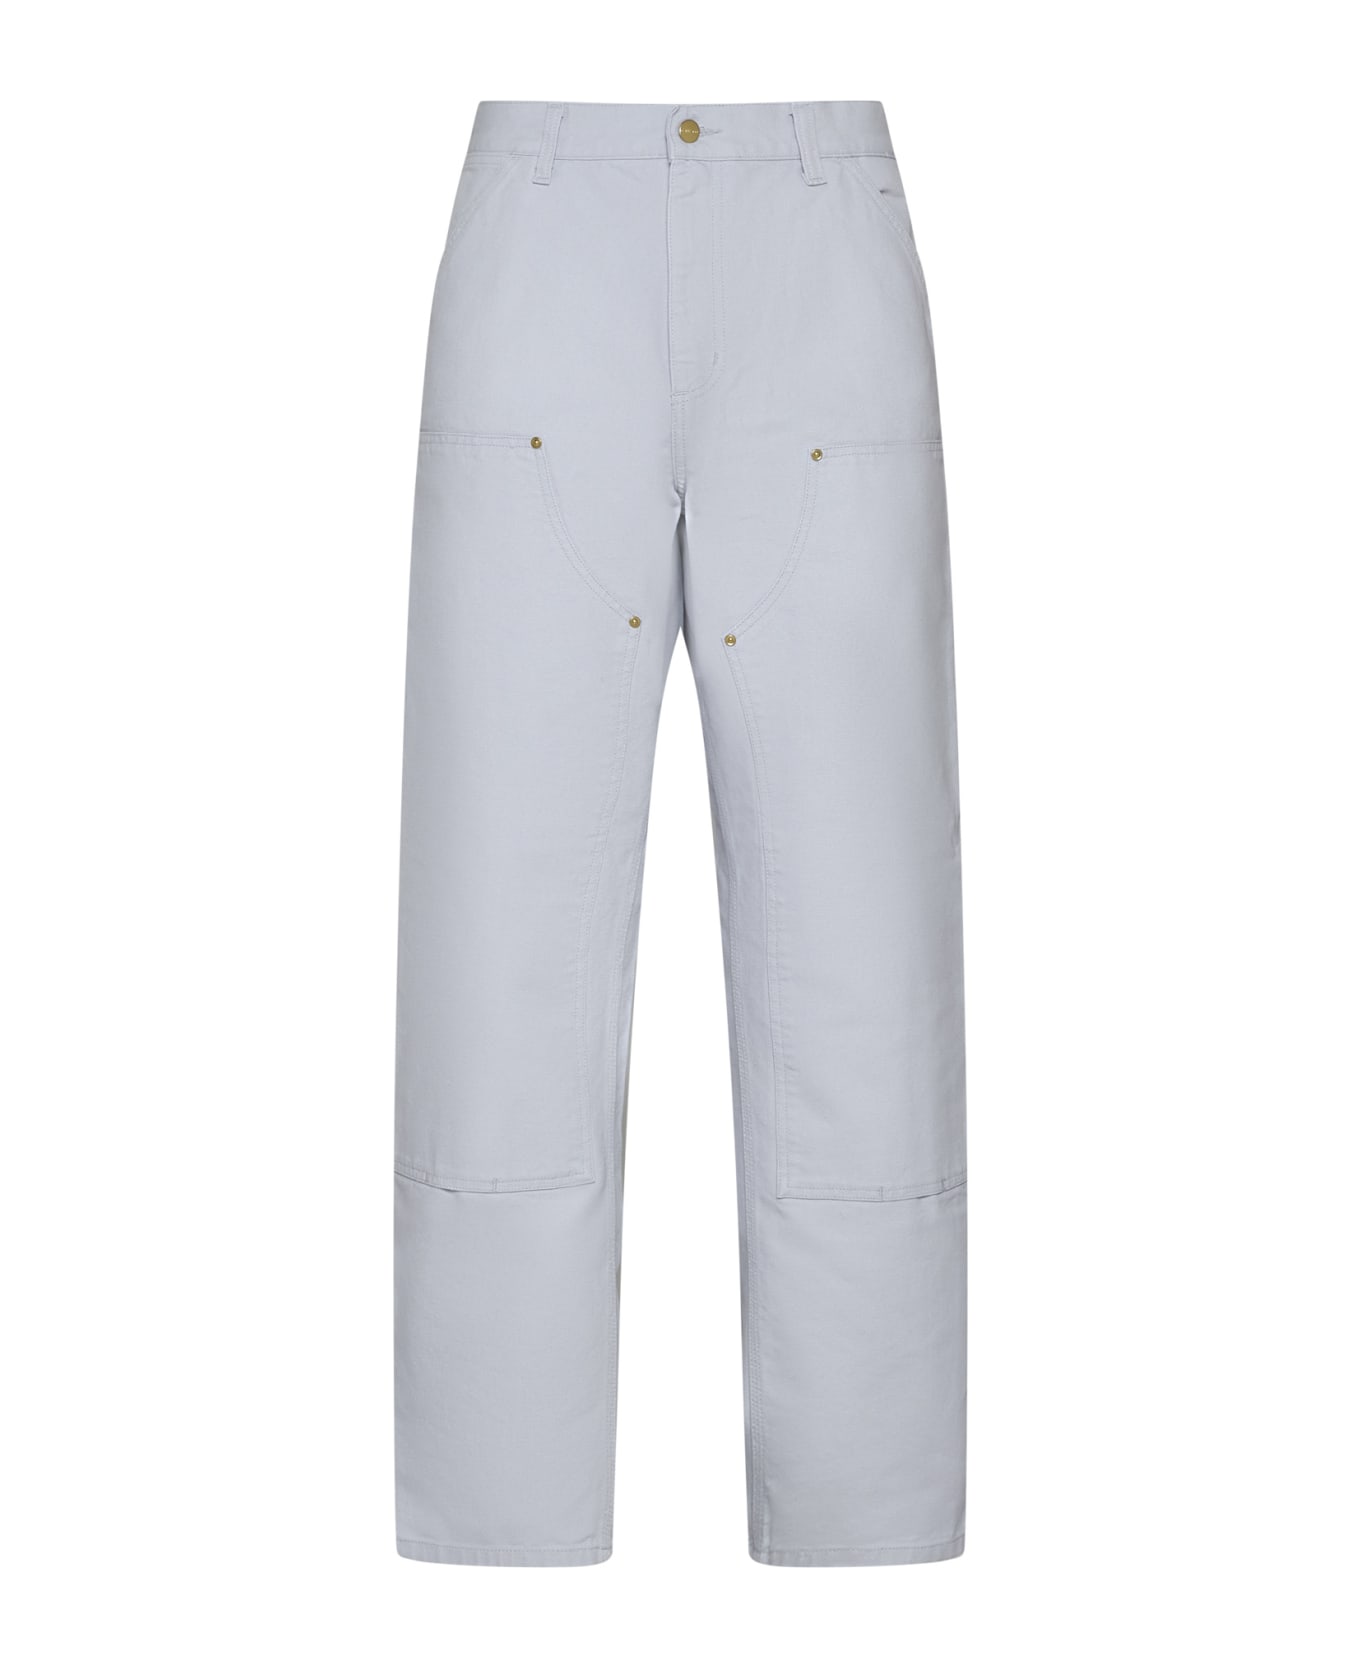 Carhartt Jeans - Basalt rinsed